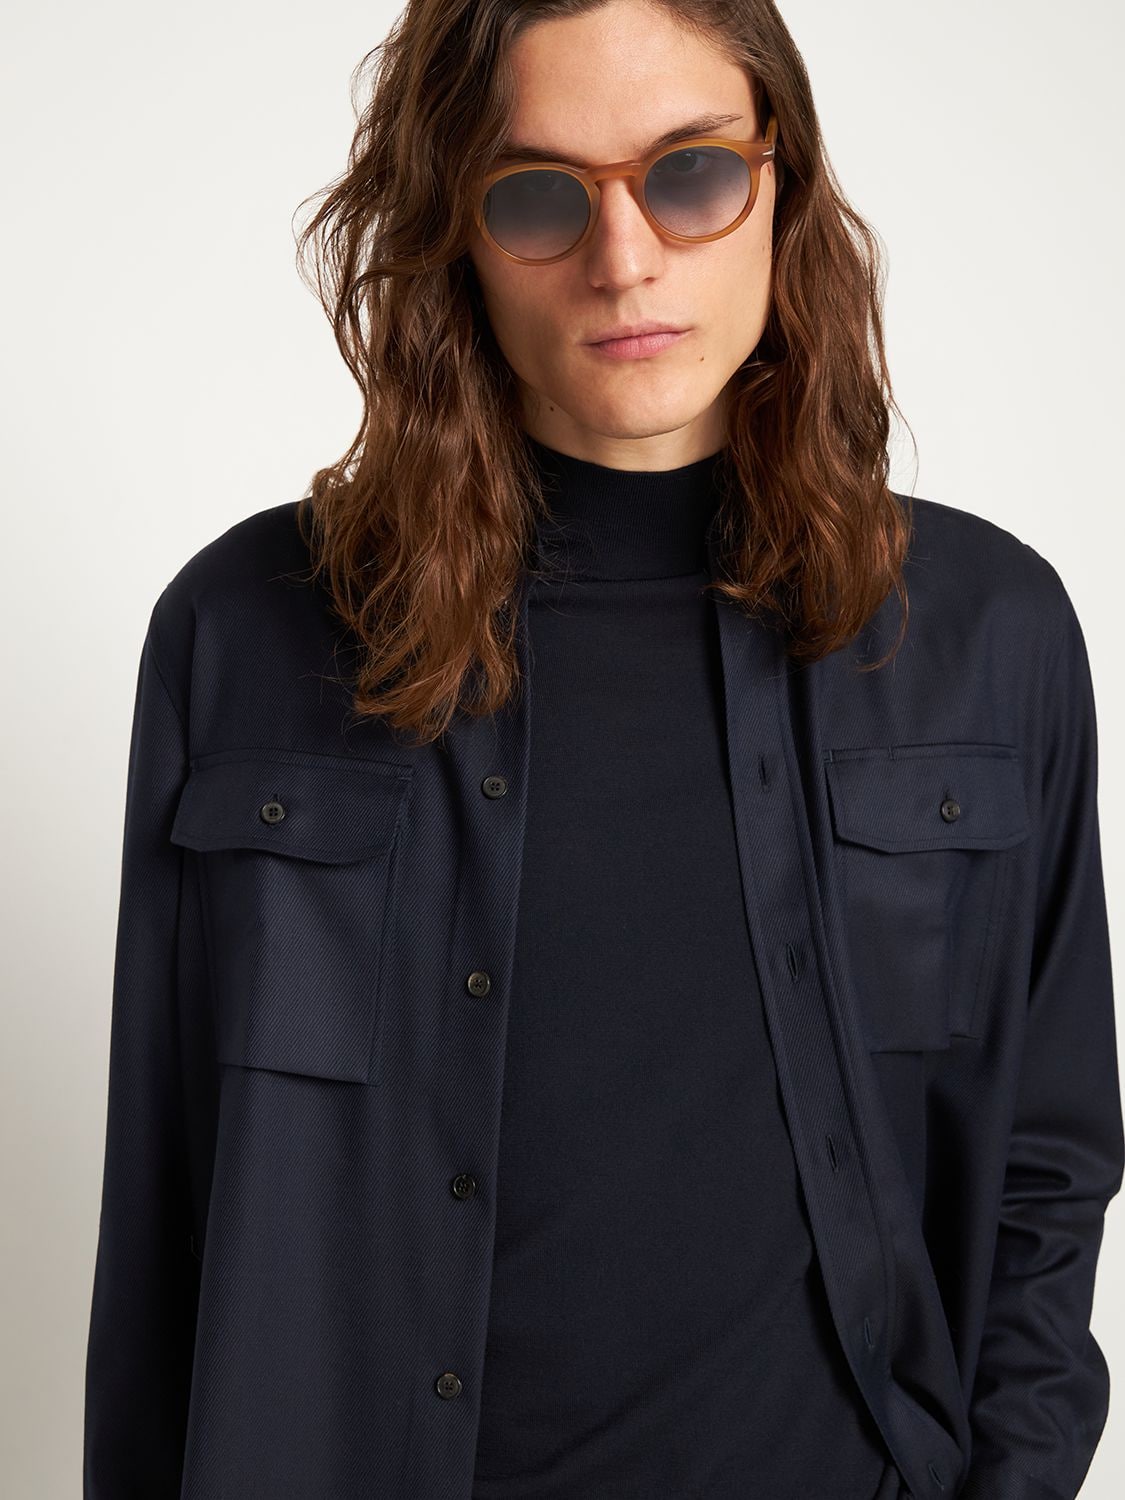 Shop Db Eyewear By David Beckham Db Round Acetate Sunglasses In Honey,blue